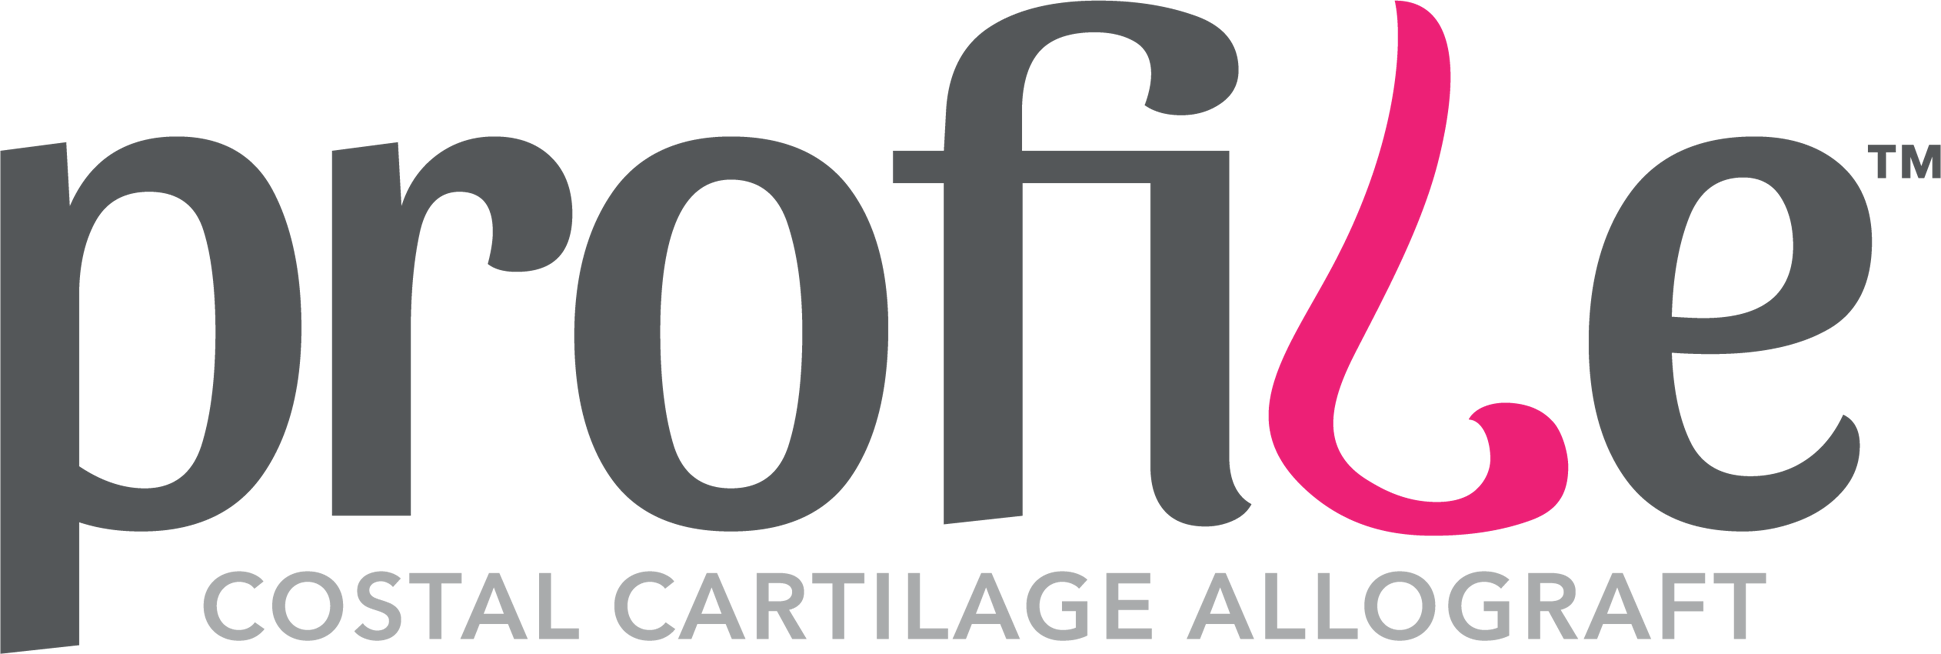 Profile™ Costal Cartilage Allograft